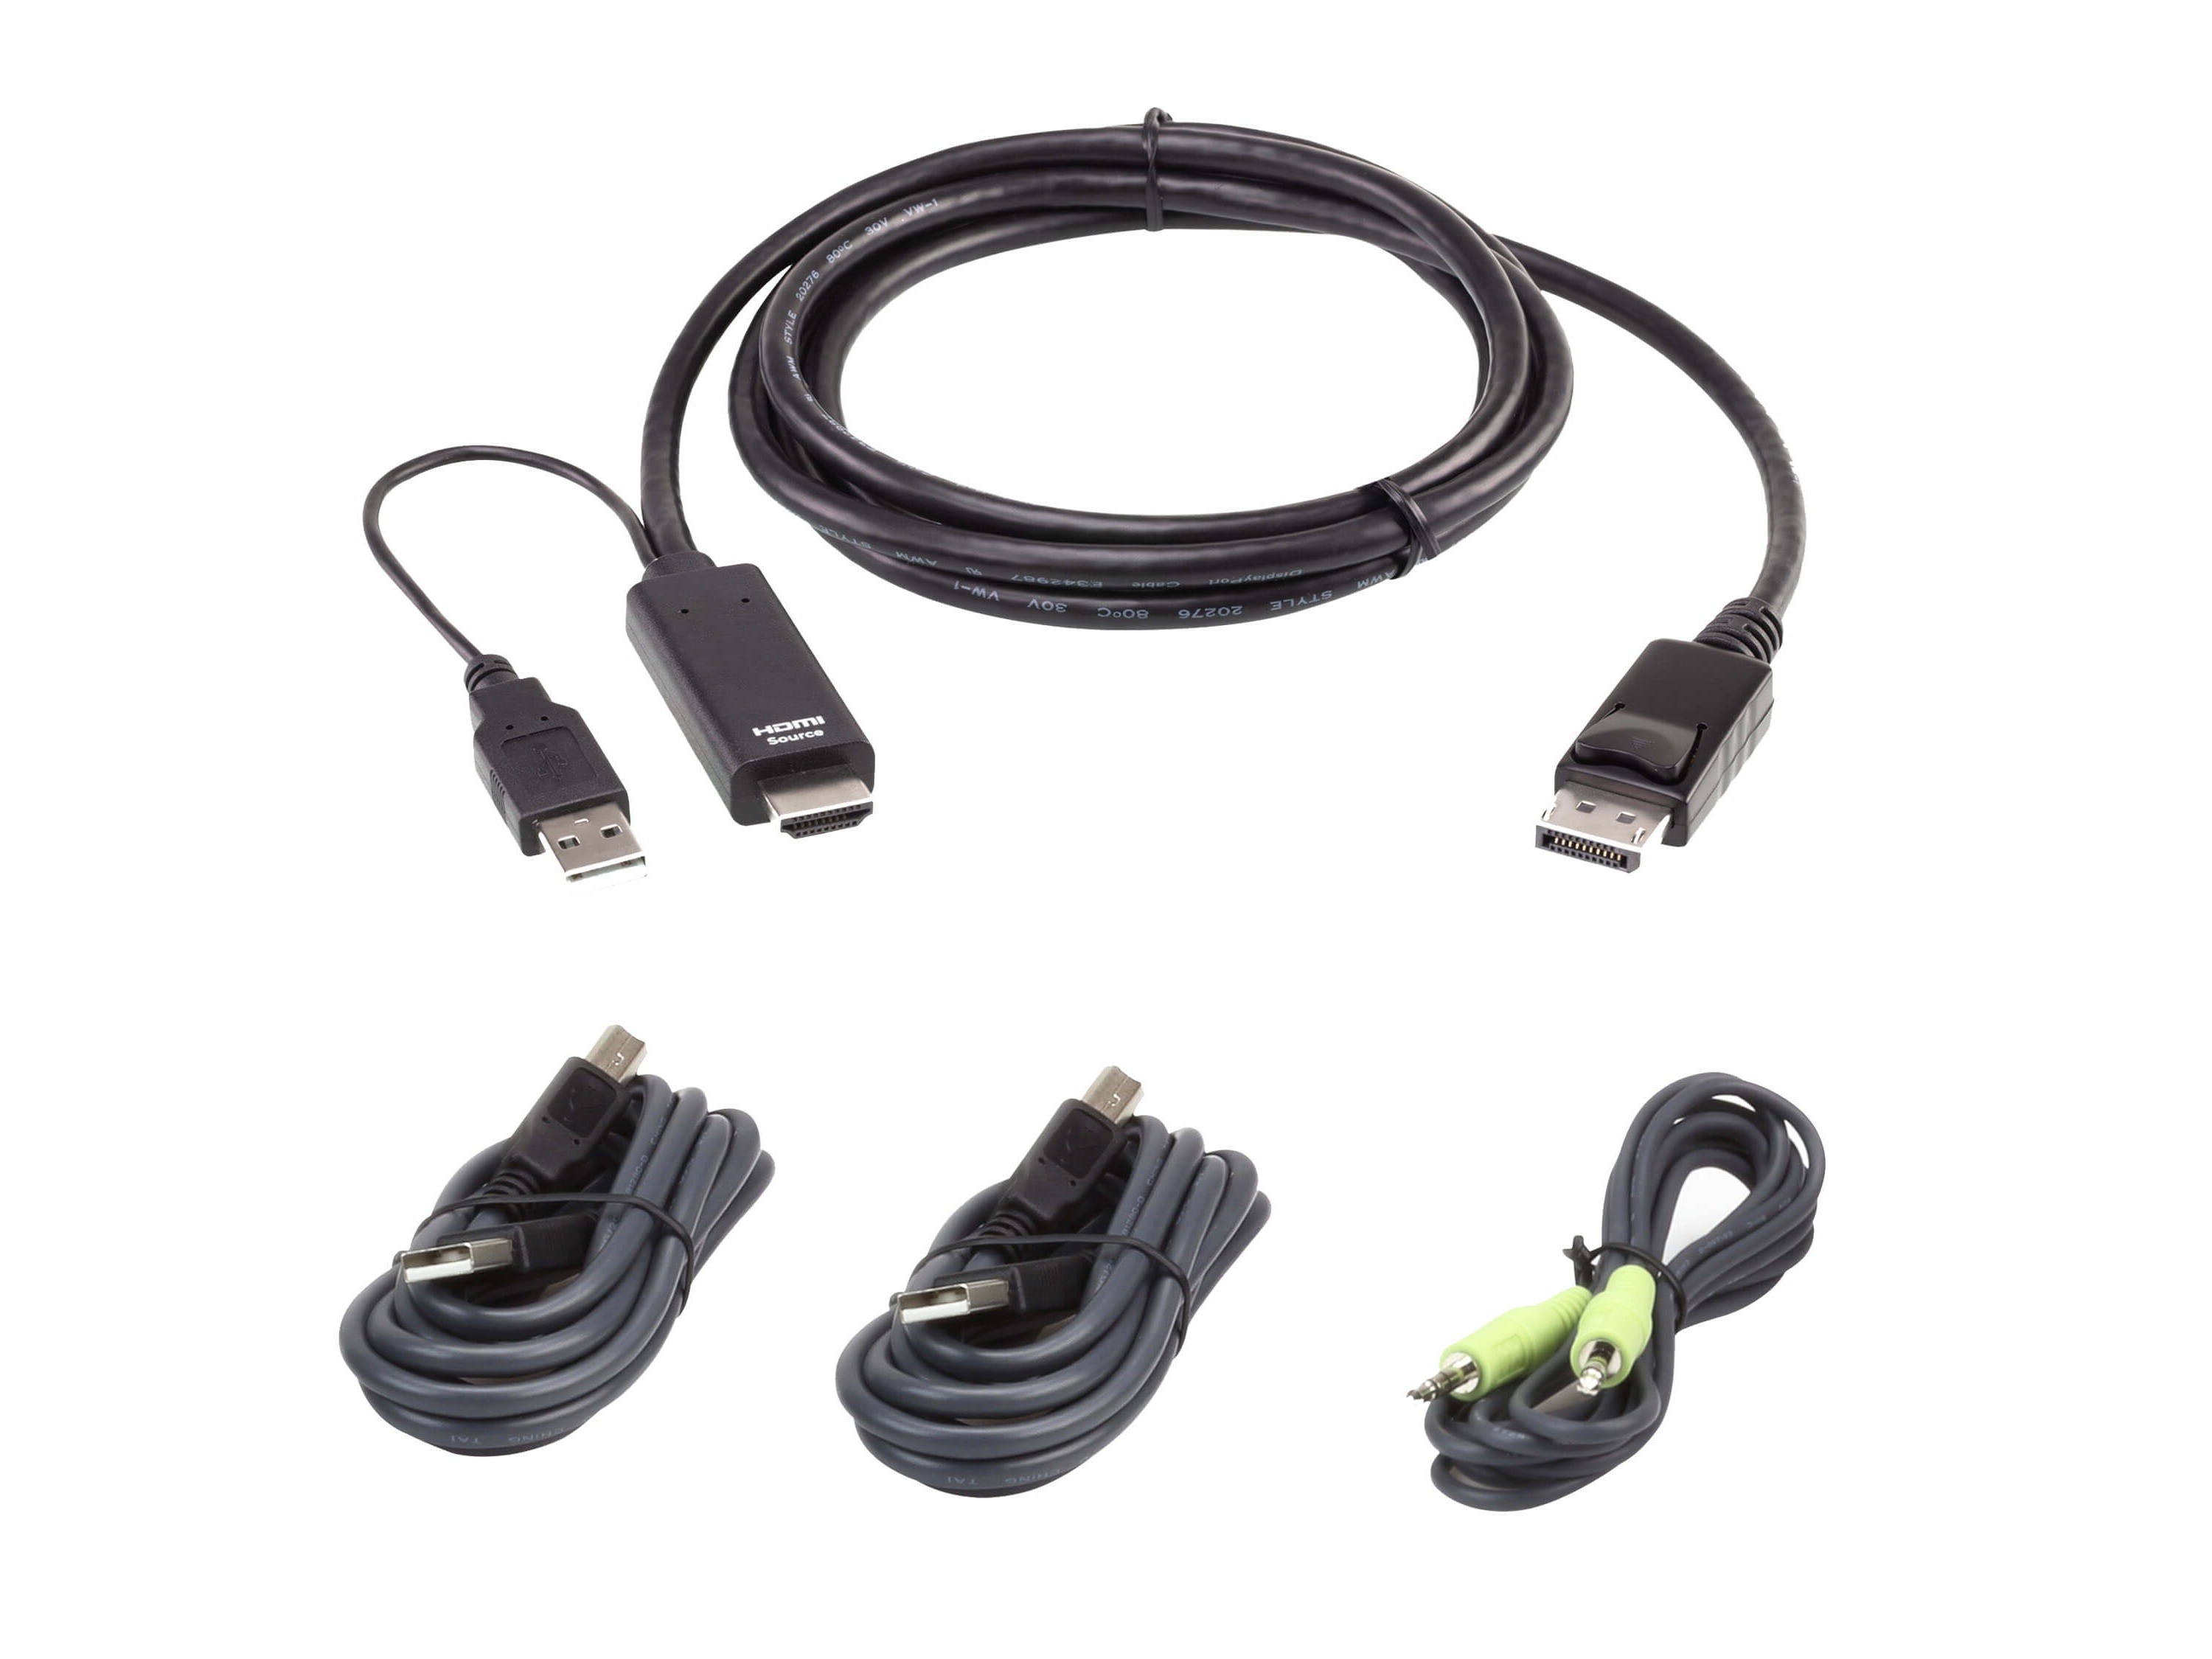 2L7D02UHDPX4 1.8m USB Universal Secure KVM Cable Kit by Aten